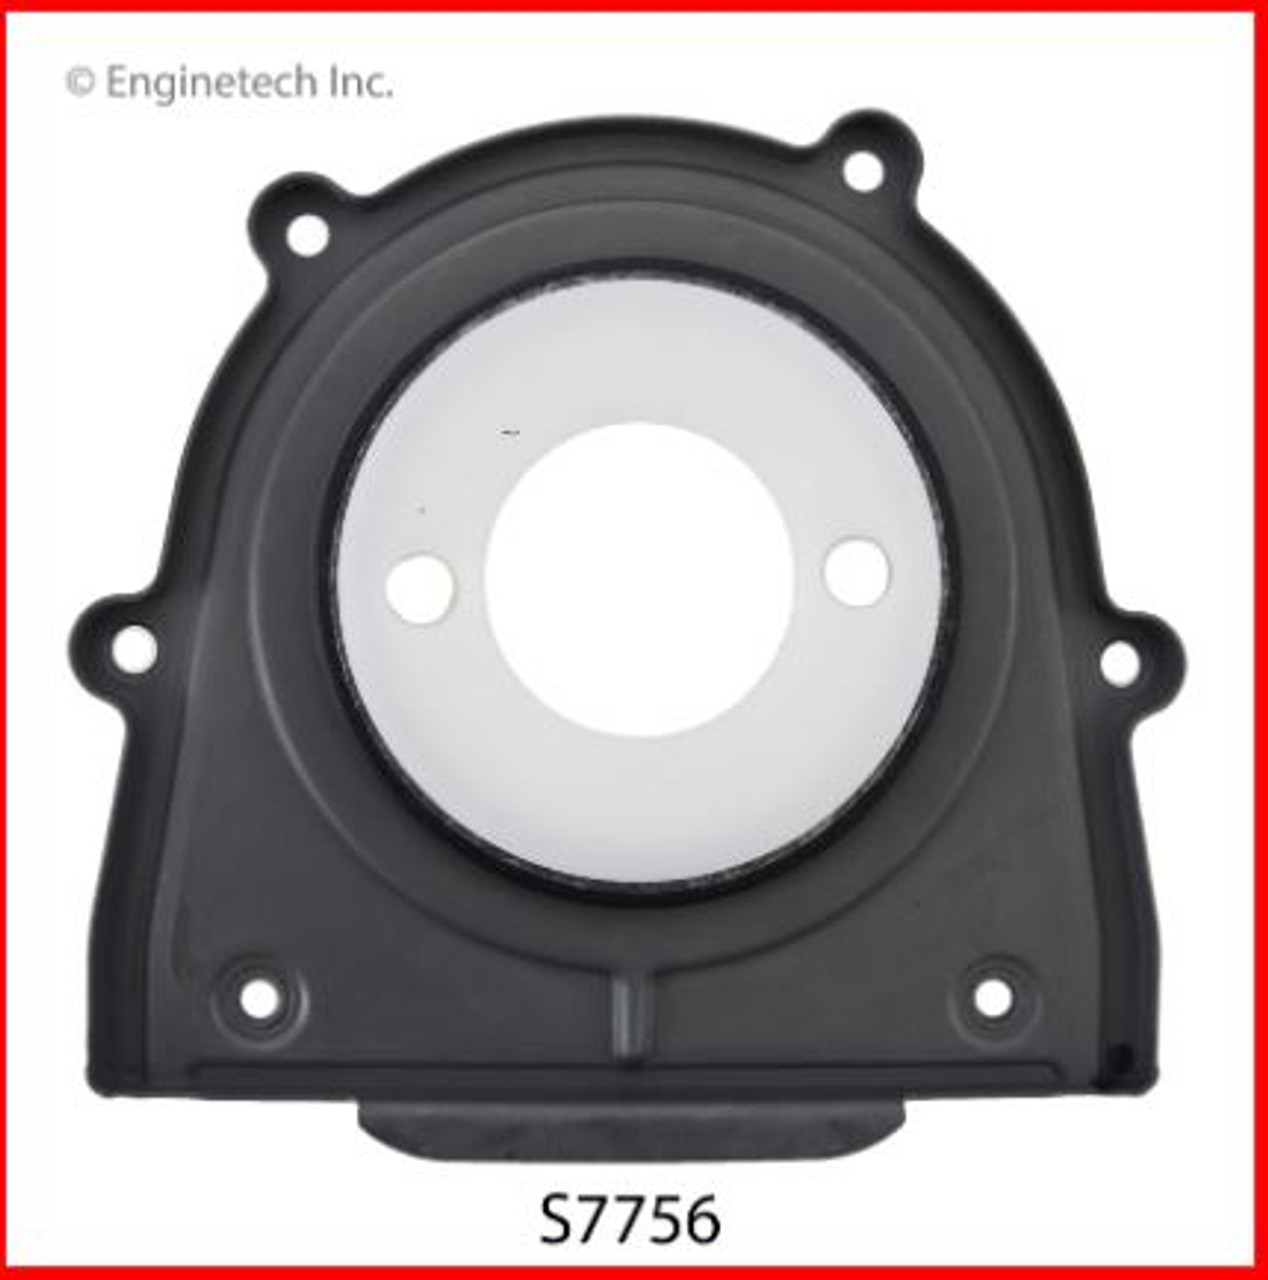 Crankshaft Seal - 2012 Mazda 6 2.5L (S7756.K173)